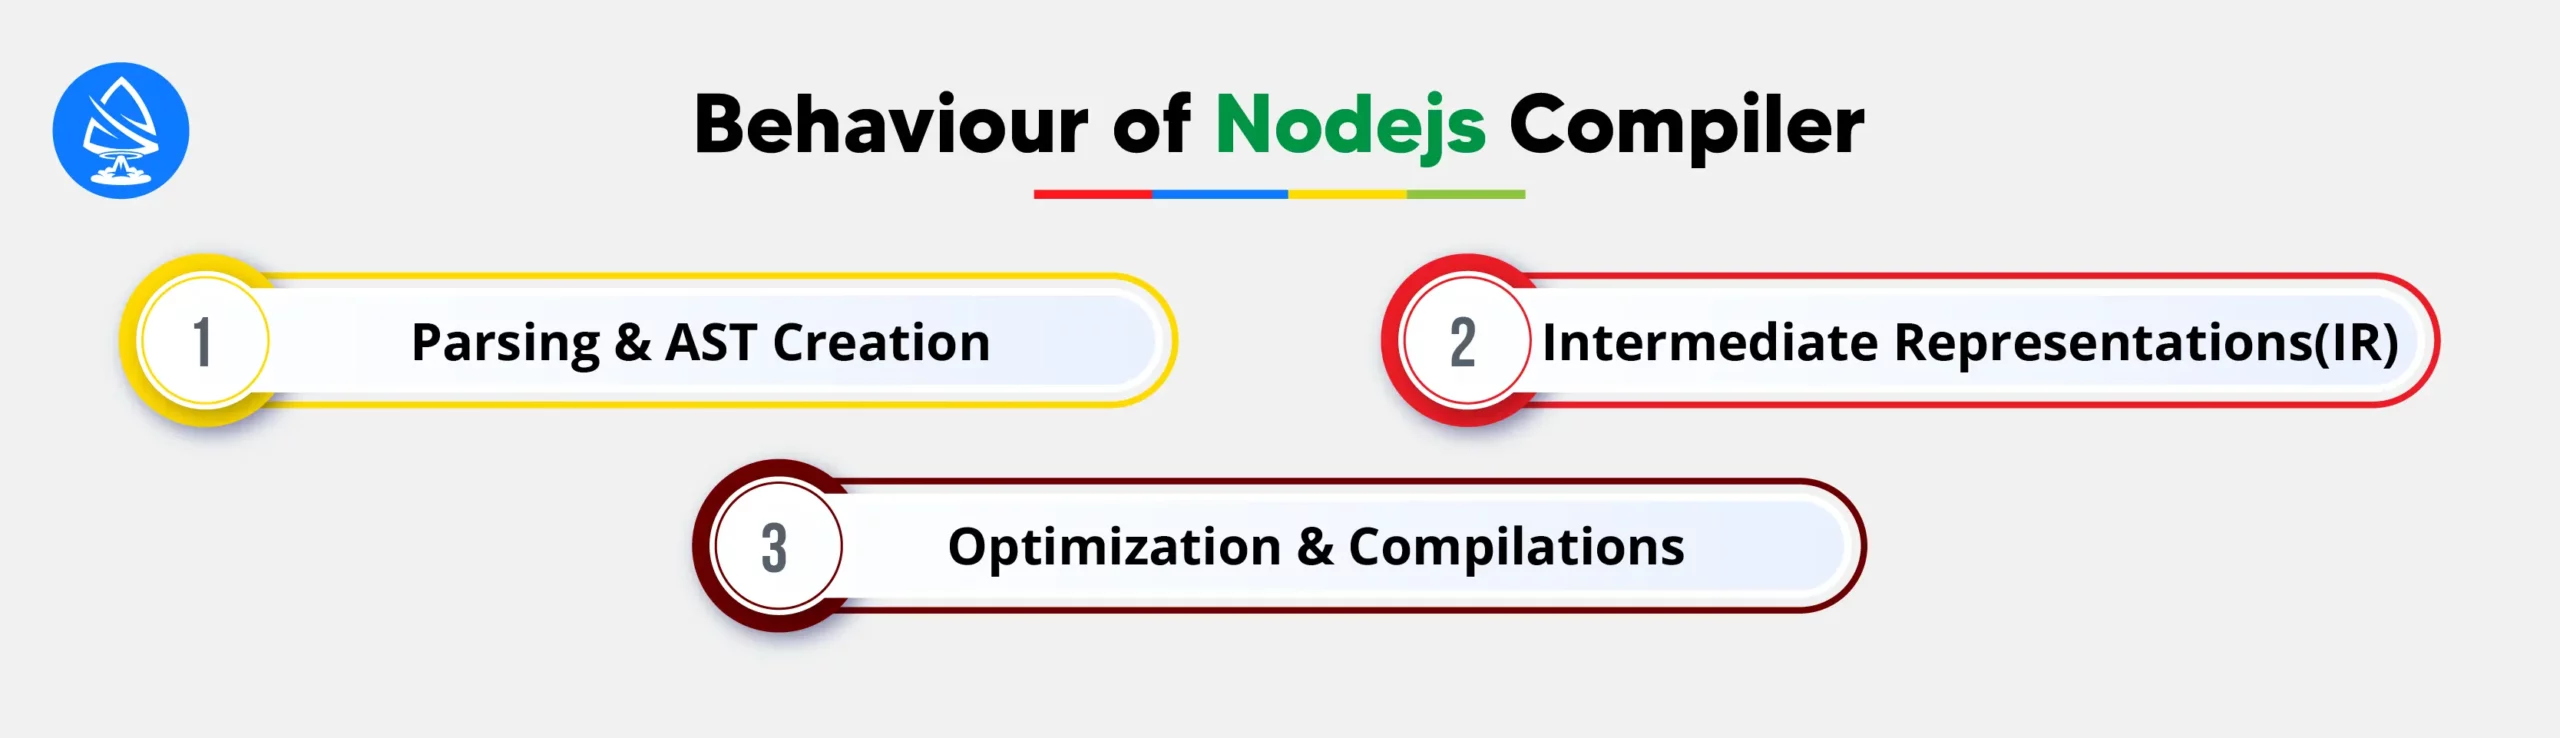 Behaviour of Nodejs Compiler 